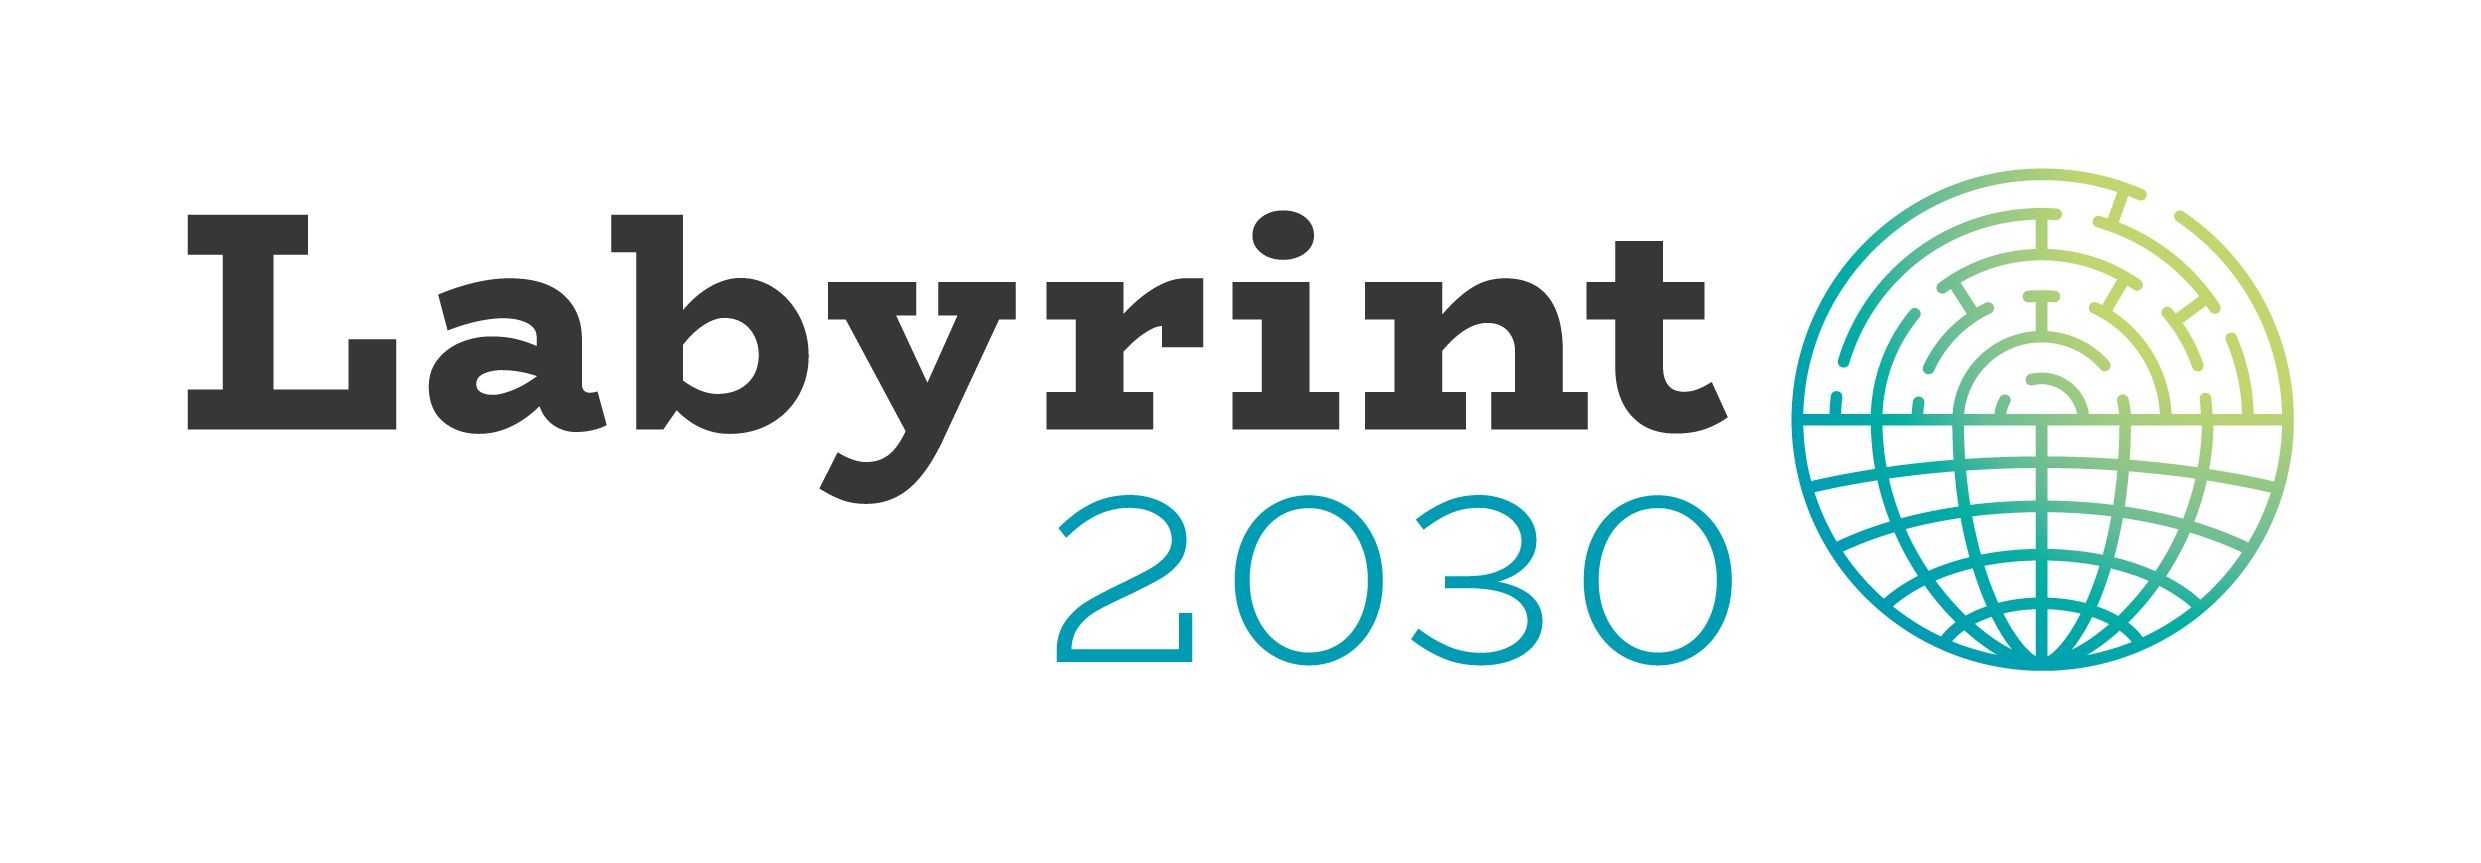 Labyrint 2030 logo